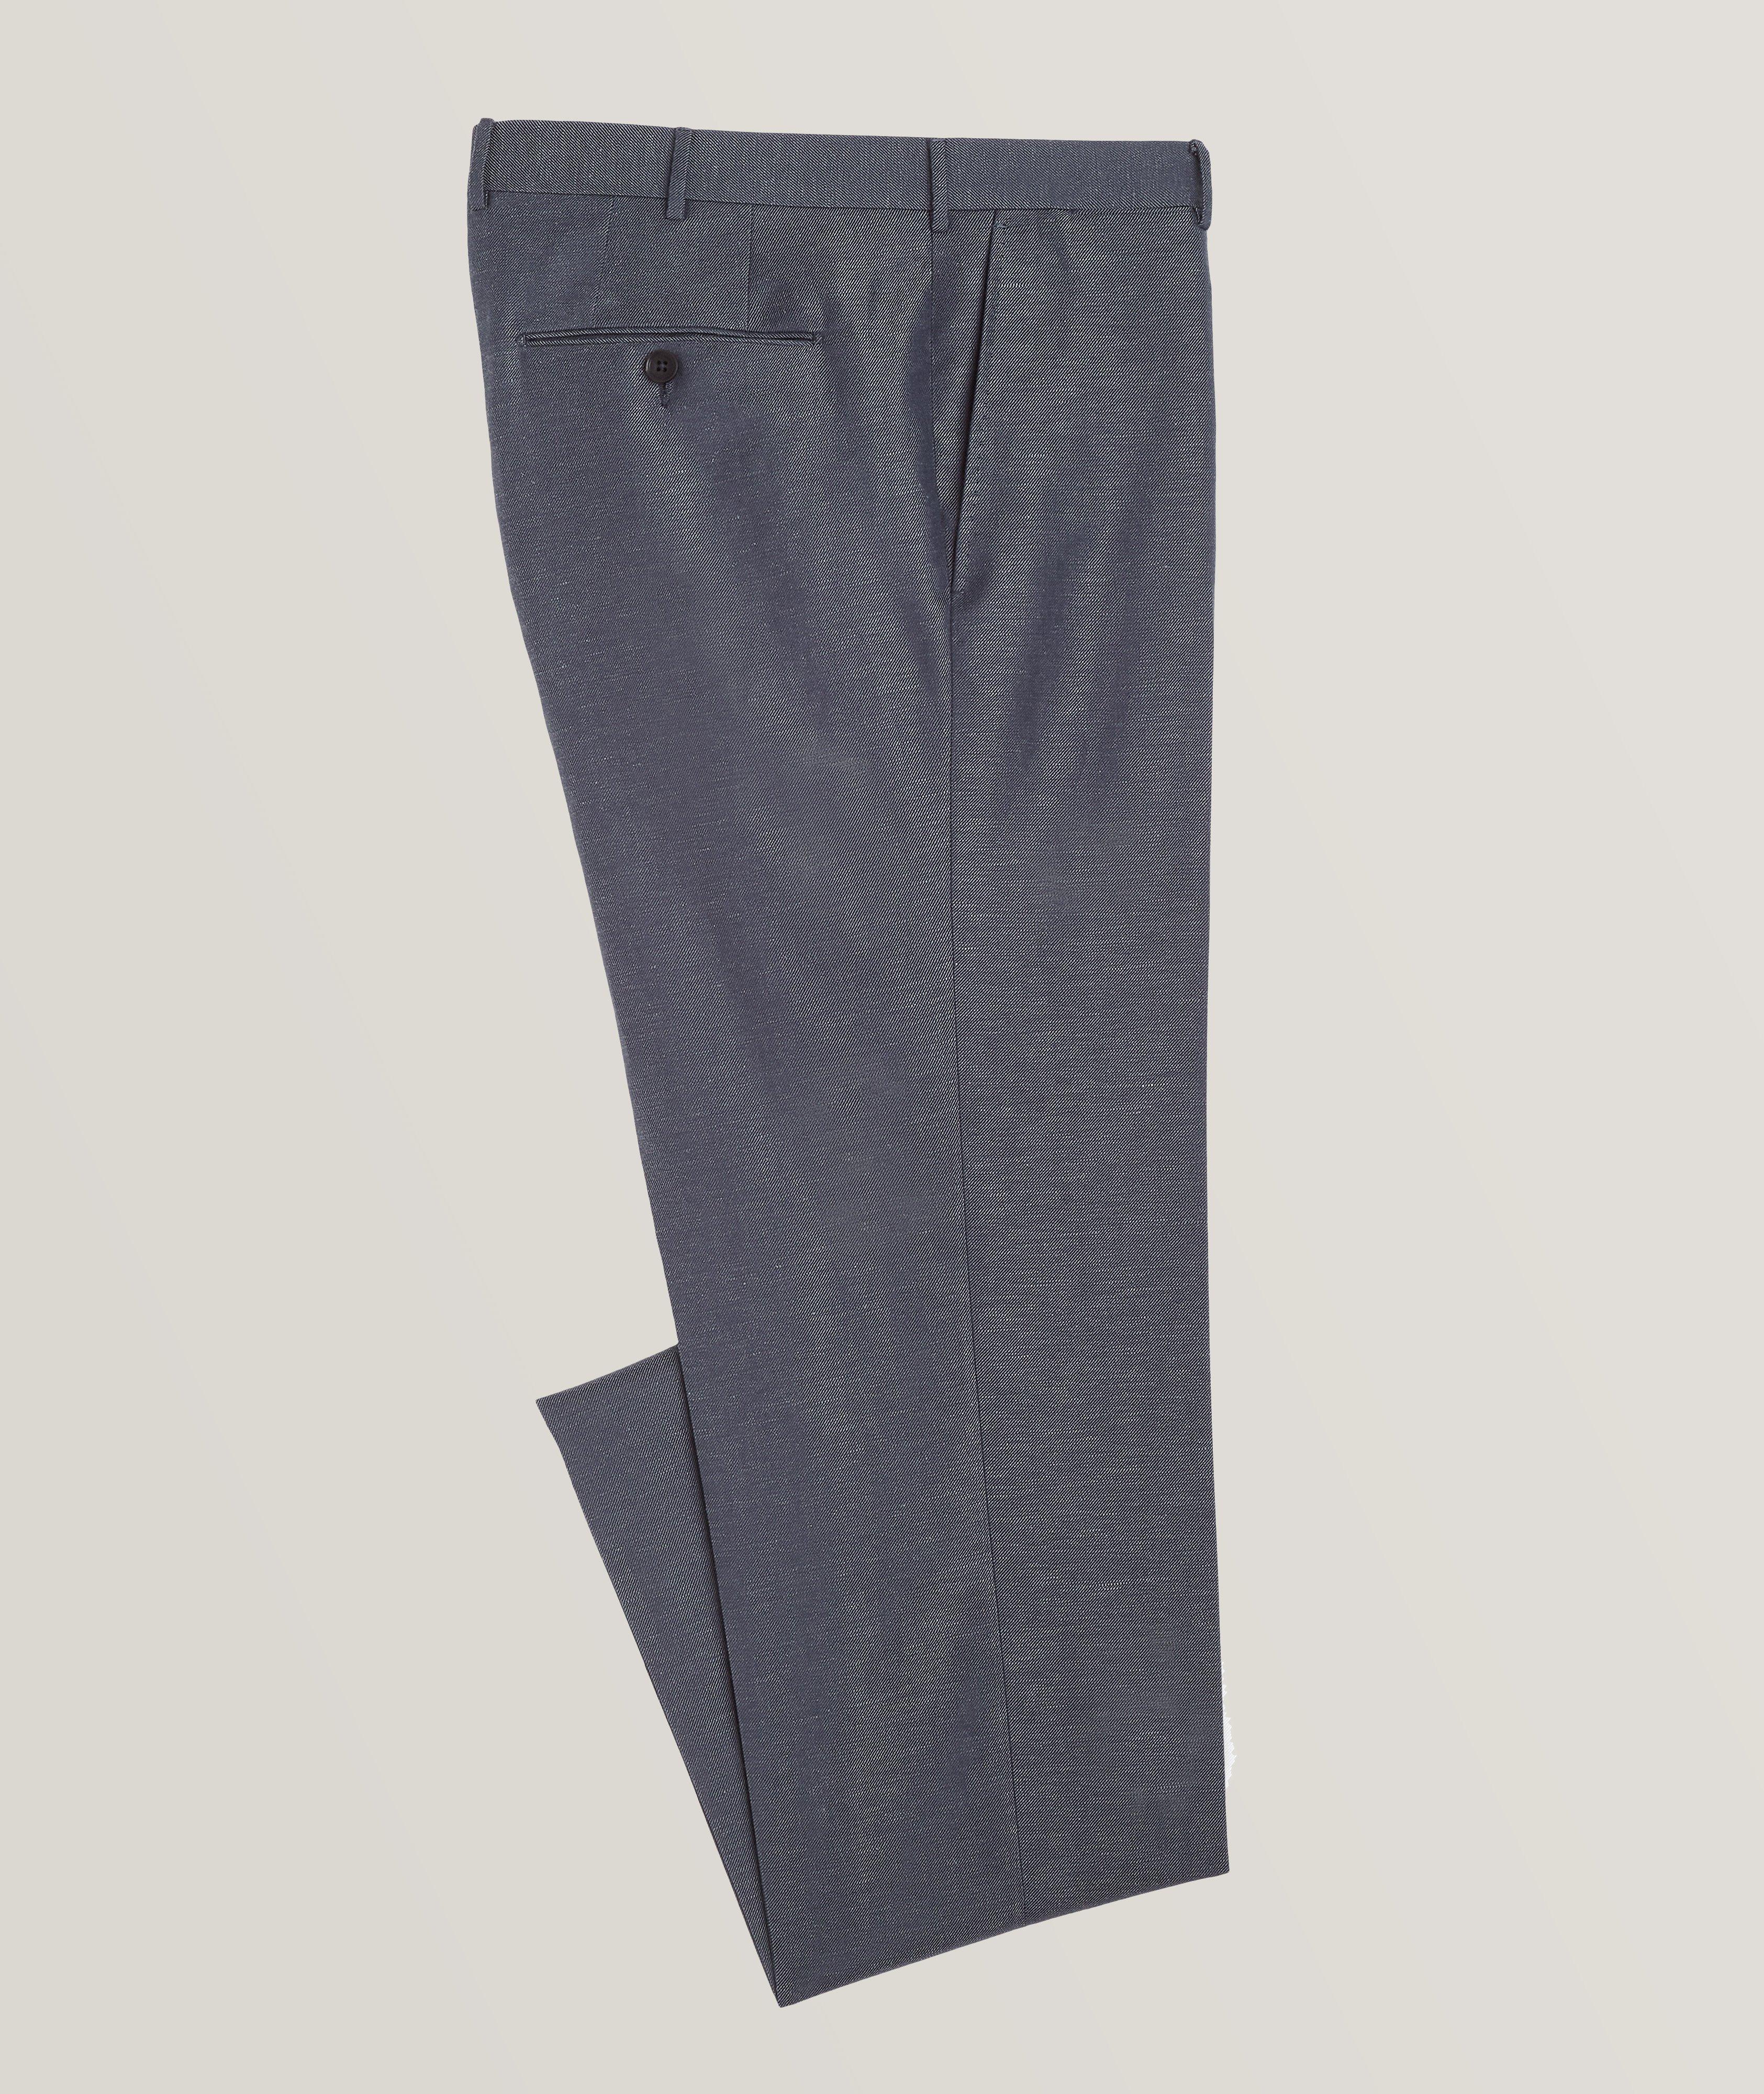 Zegna Sartorial Wool-Linen Dress Pants